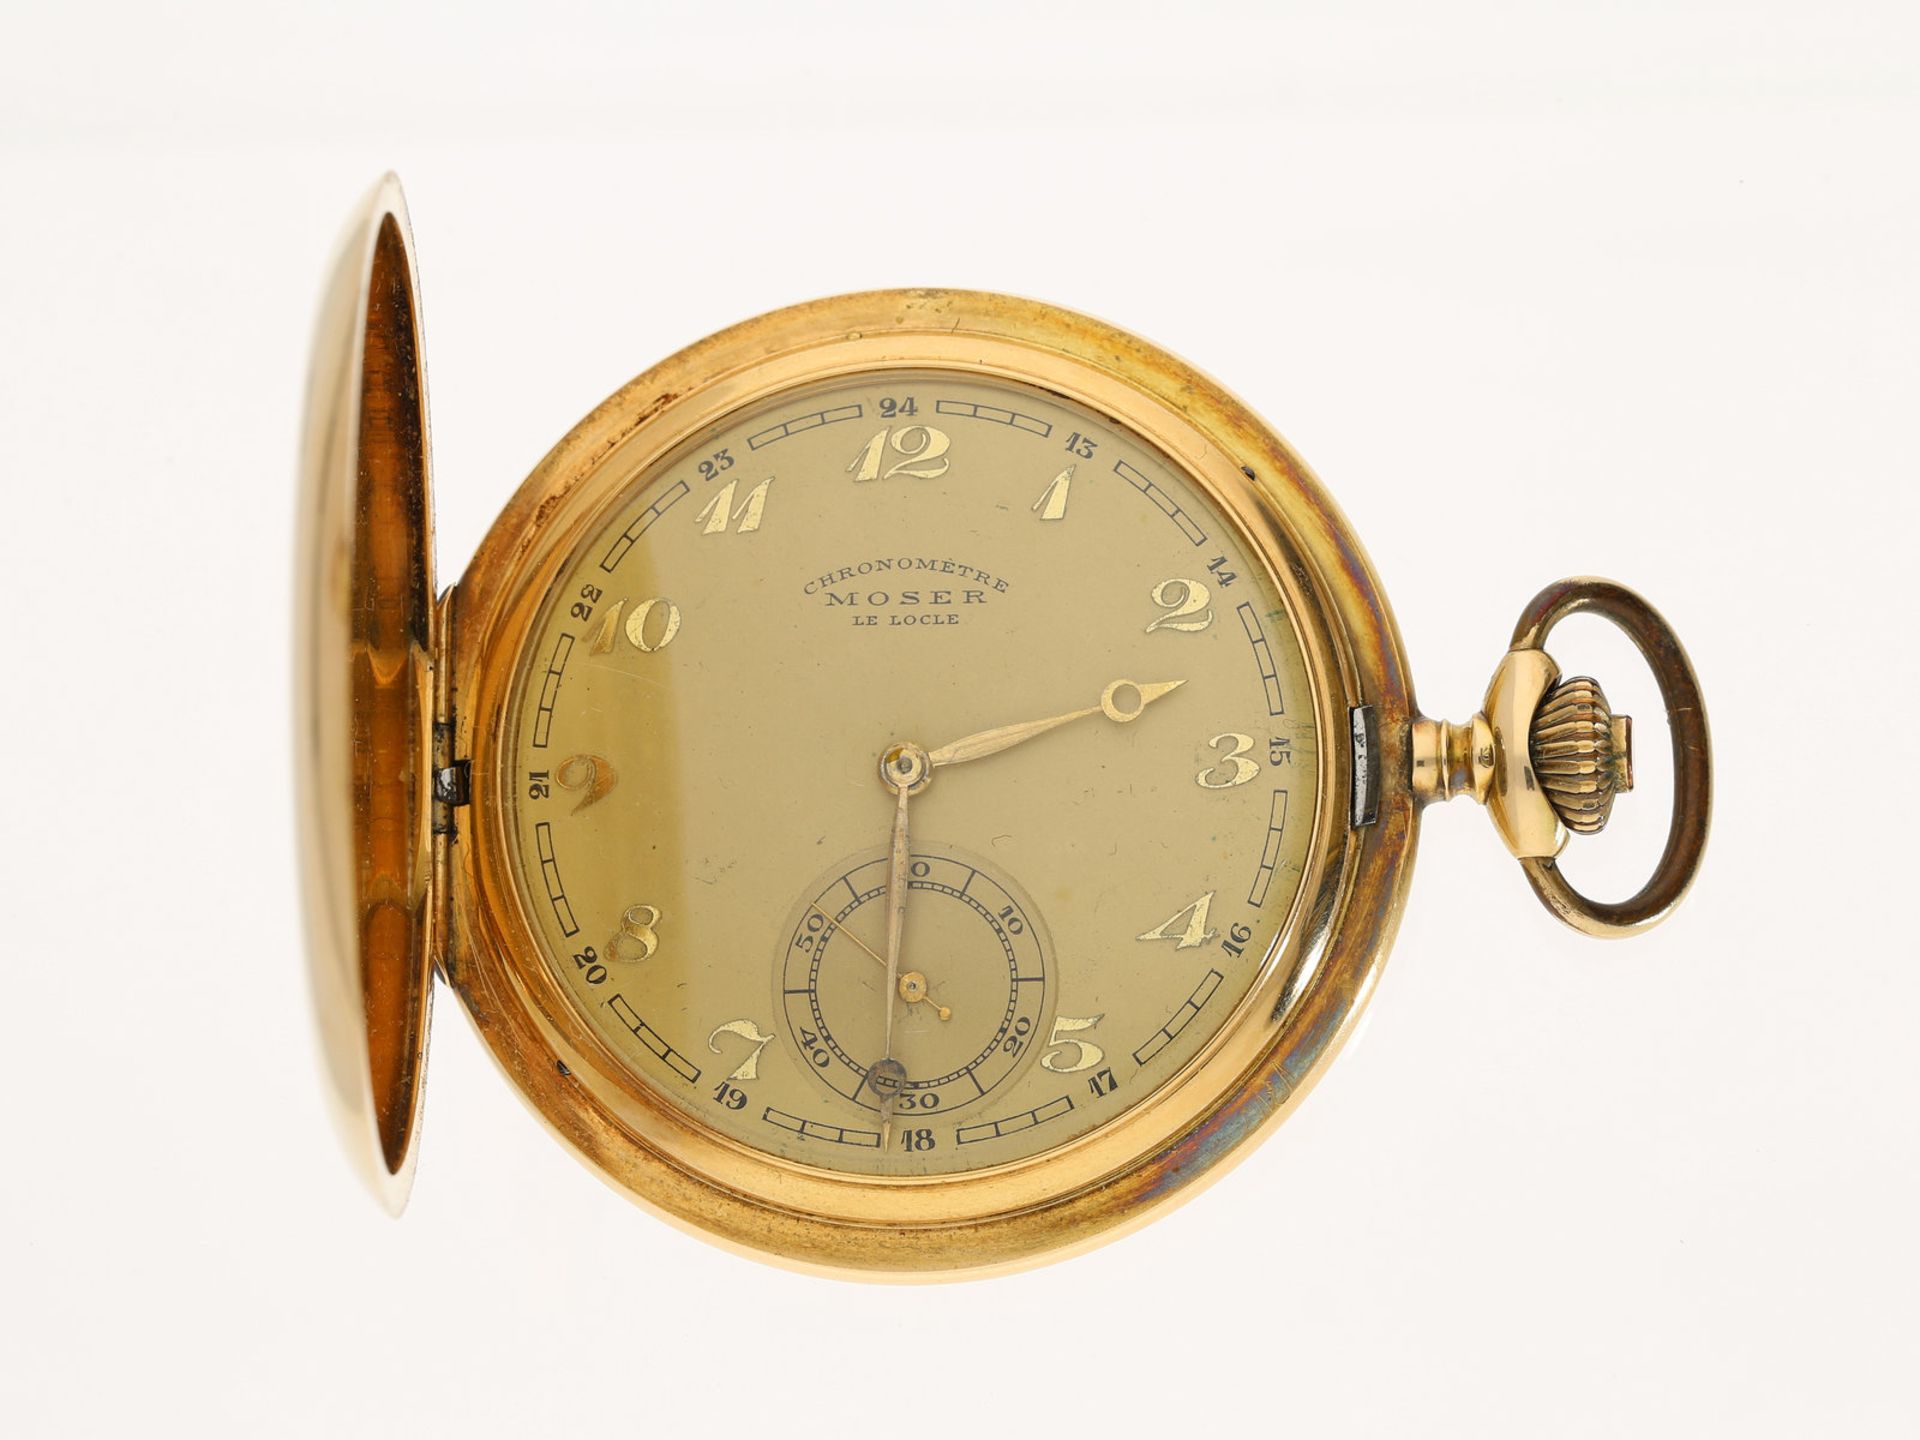 Taschenuhr: hochwertige Goldsavonnette in Chronometerqualität, 30er Jahre, Chronometre Henry Moser